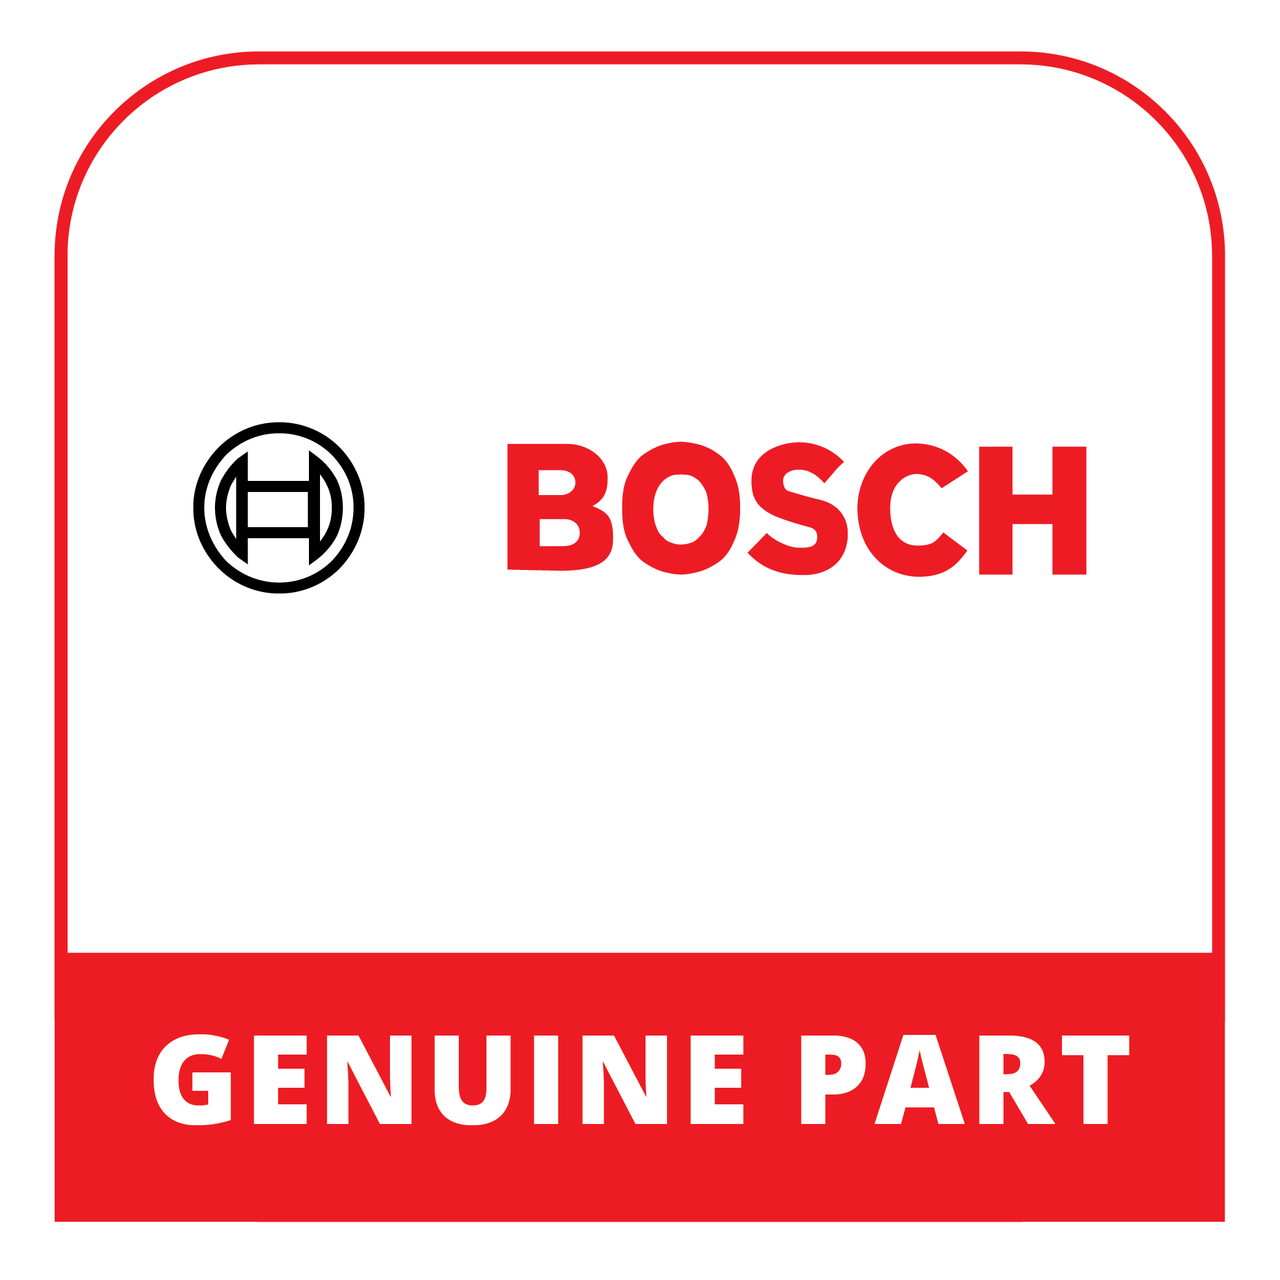 Bosch 00311902 - Ceramic Glass Care - Genuine Bosch (Thermador) Part